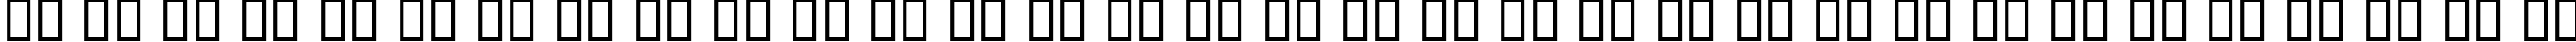 Пример написания русского алфавита шрифтом B Koodak Outline